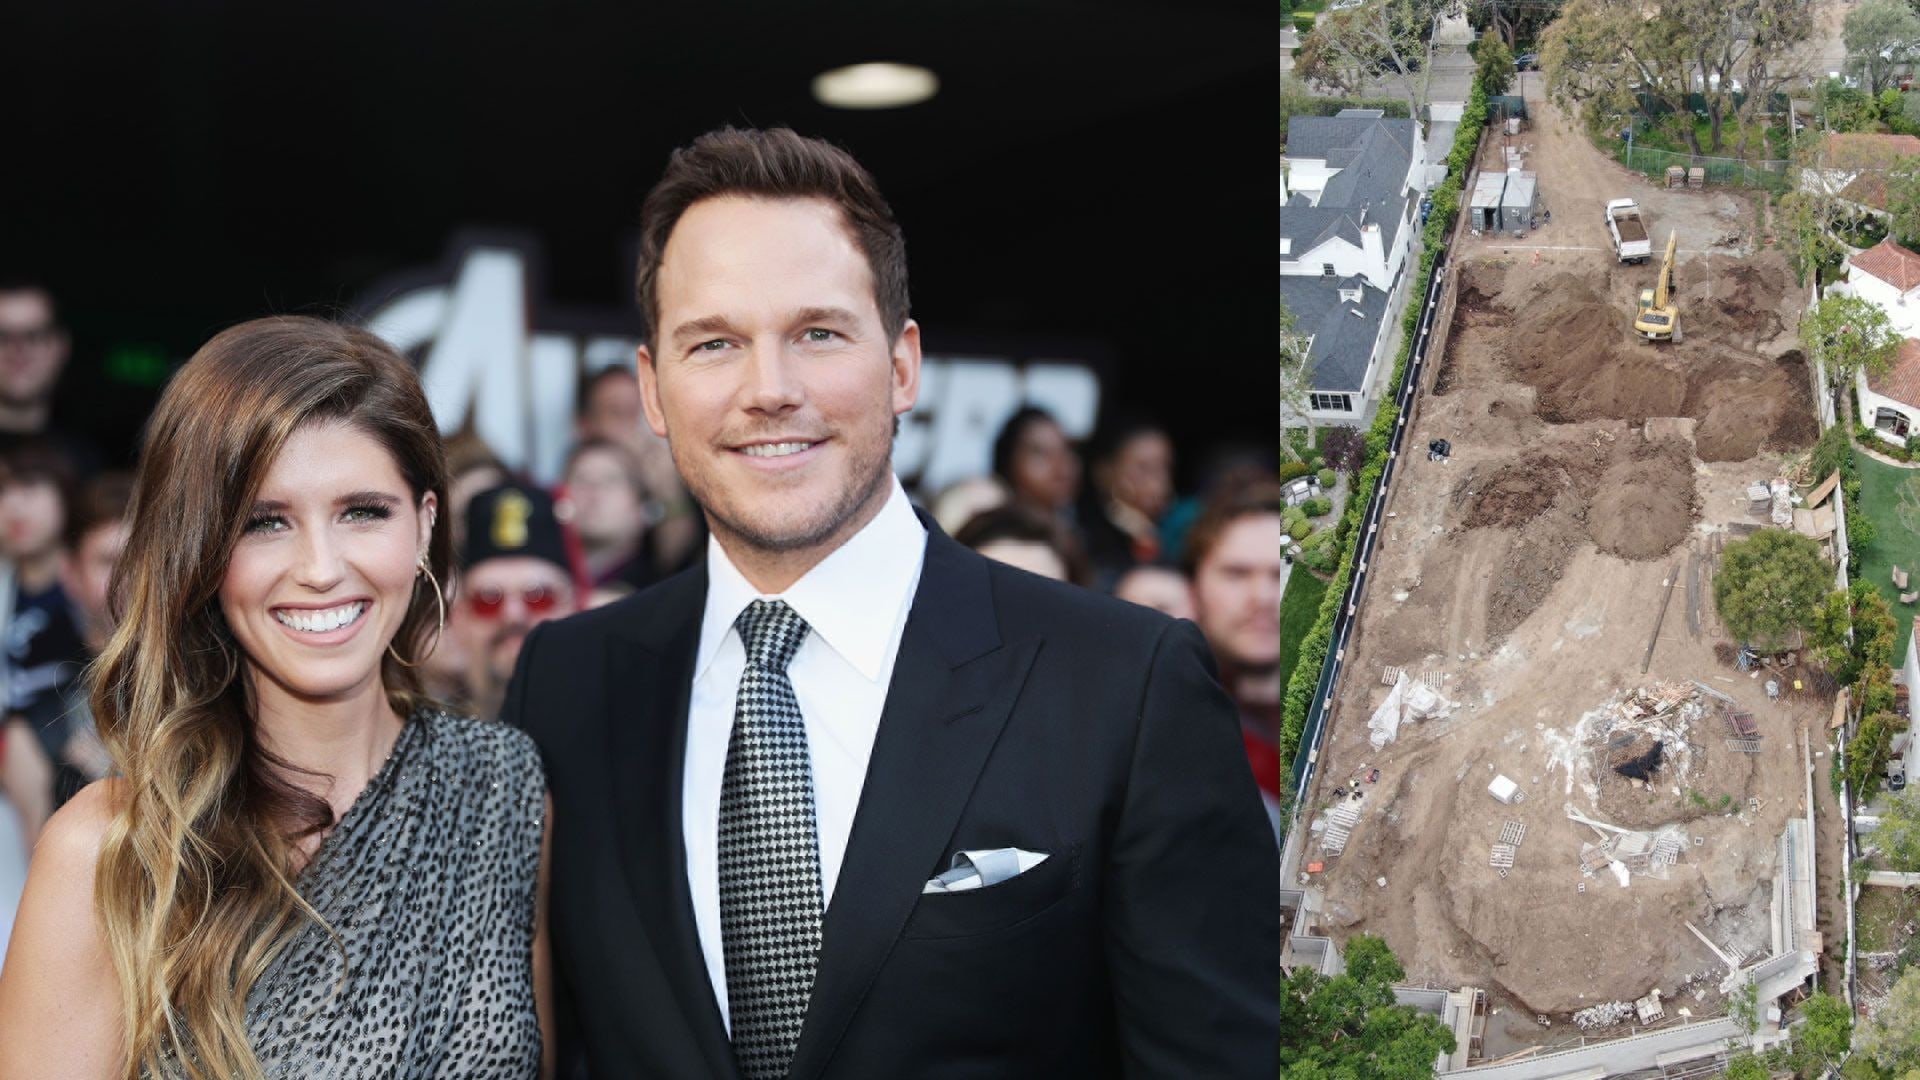 Chris Pratt demolishes historic $12.5 million LA house to build mega-mansion